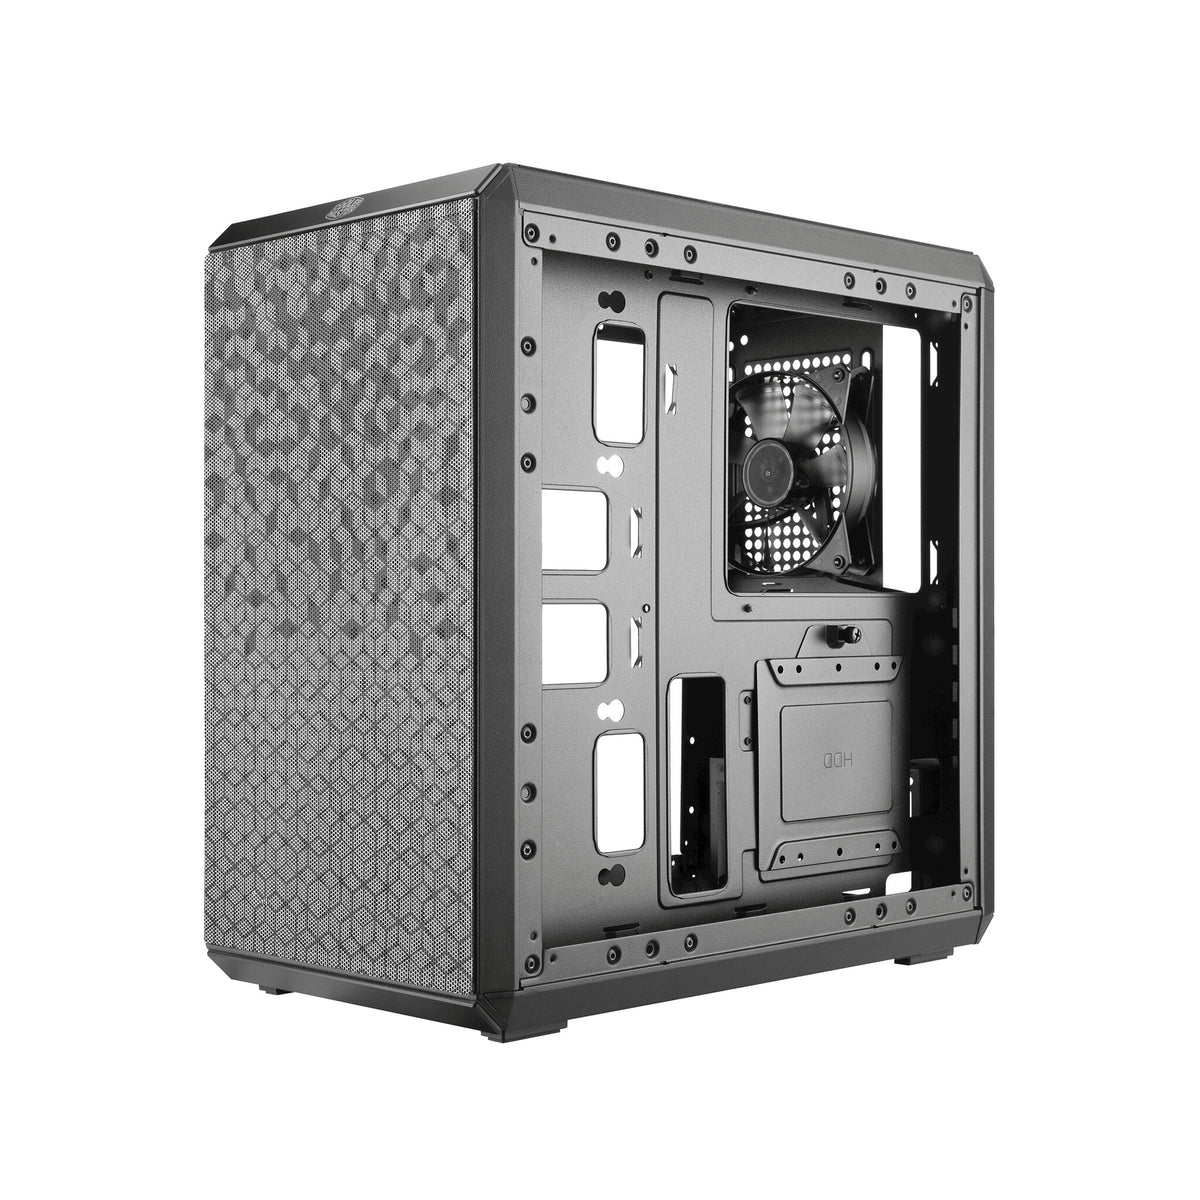 Cooler Master MasterBox Q300L - MicroATX Mini Tower Case in Black